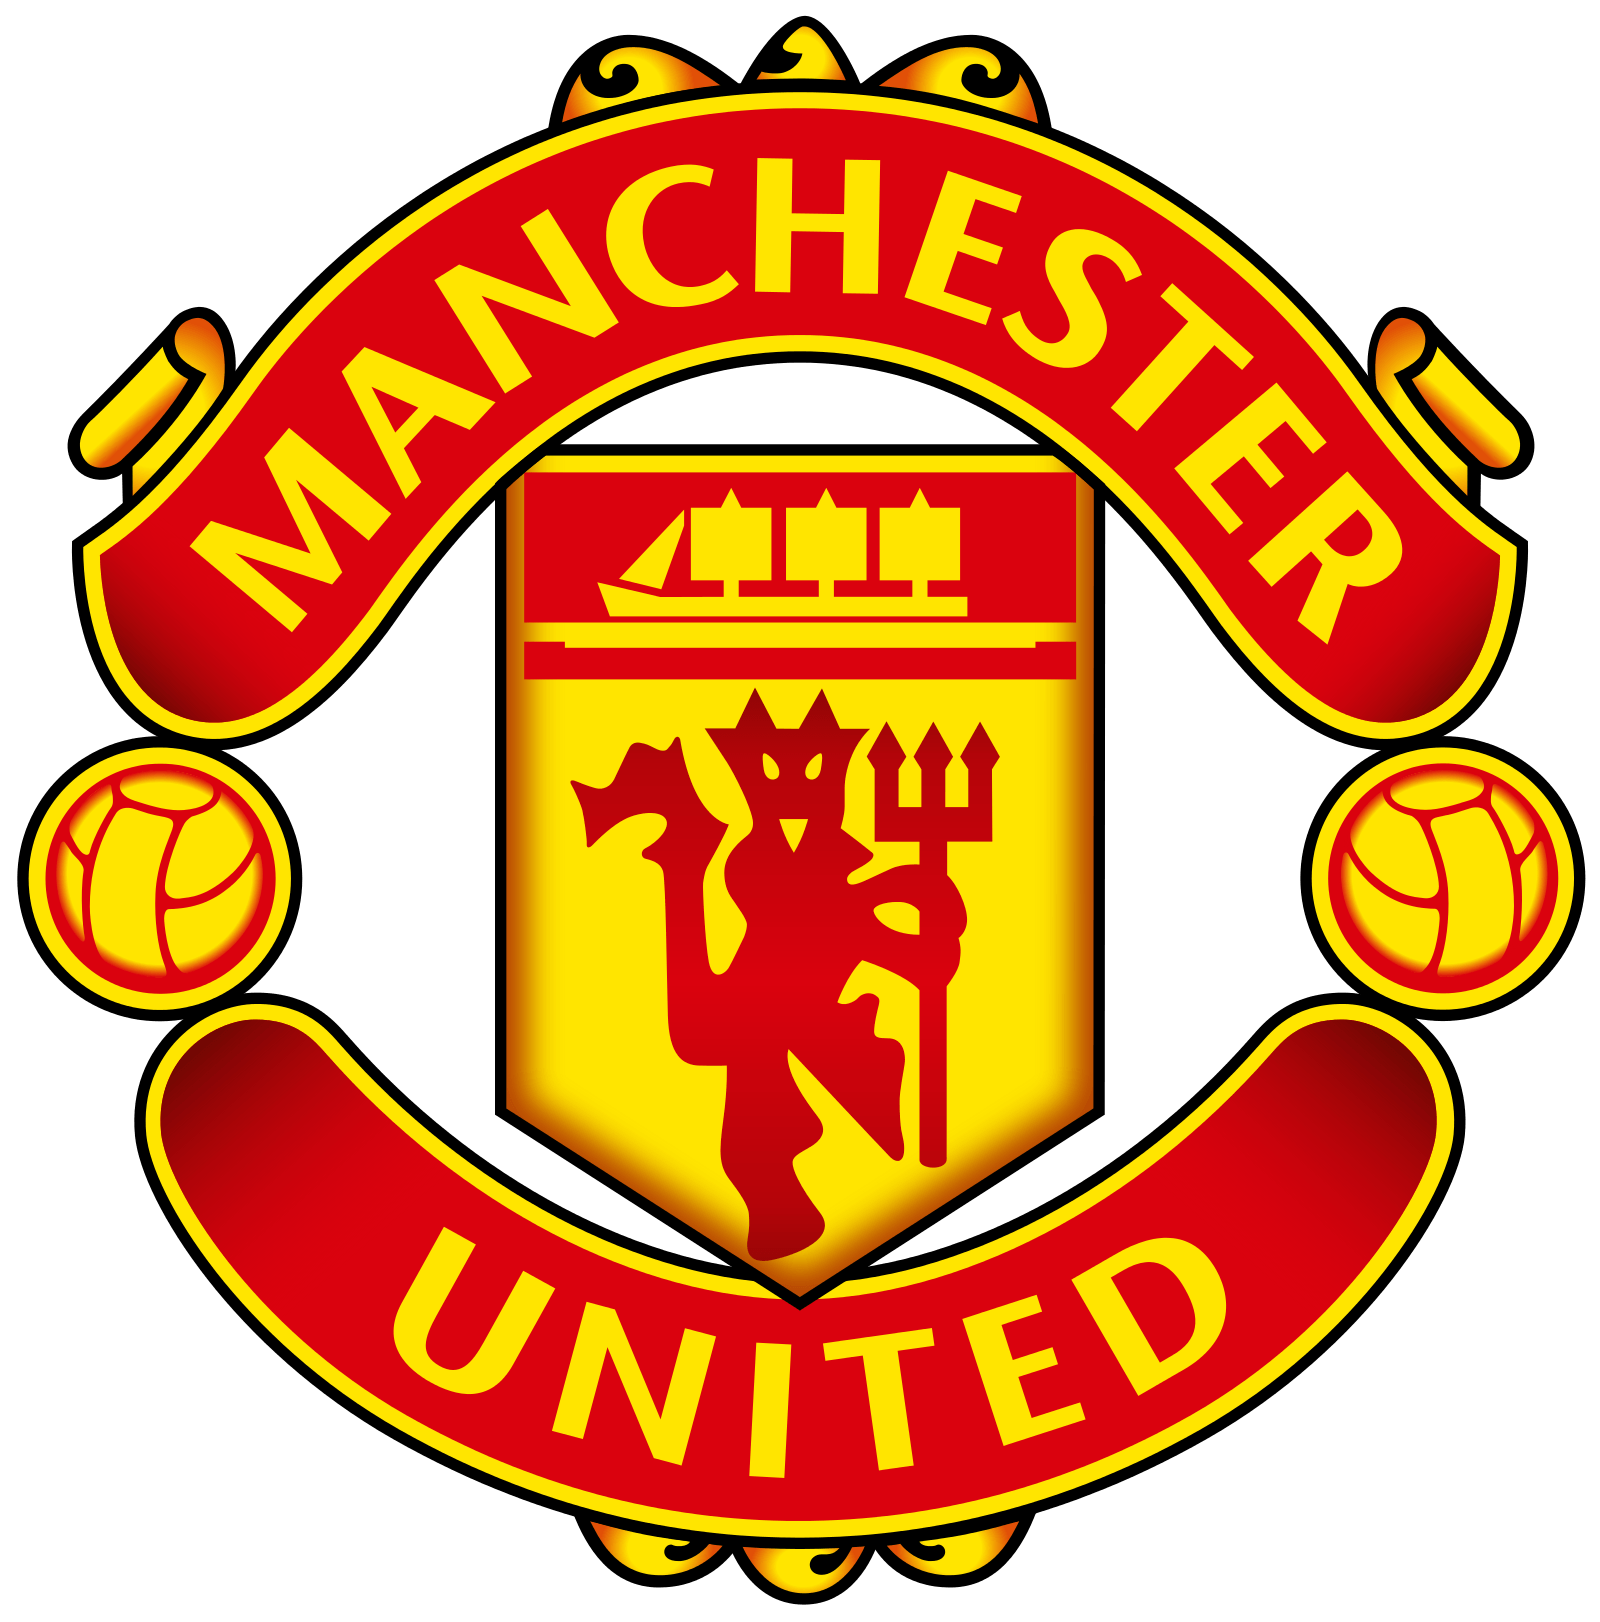 256X256 Logo - Manchester United PNG Transparent Manchester United.PNG Image